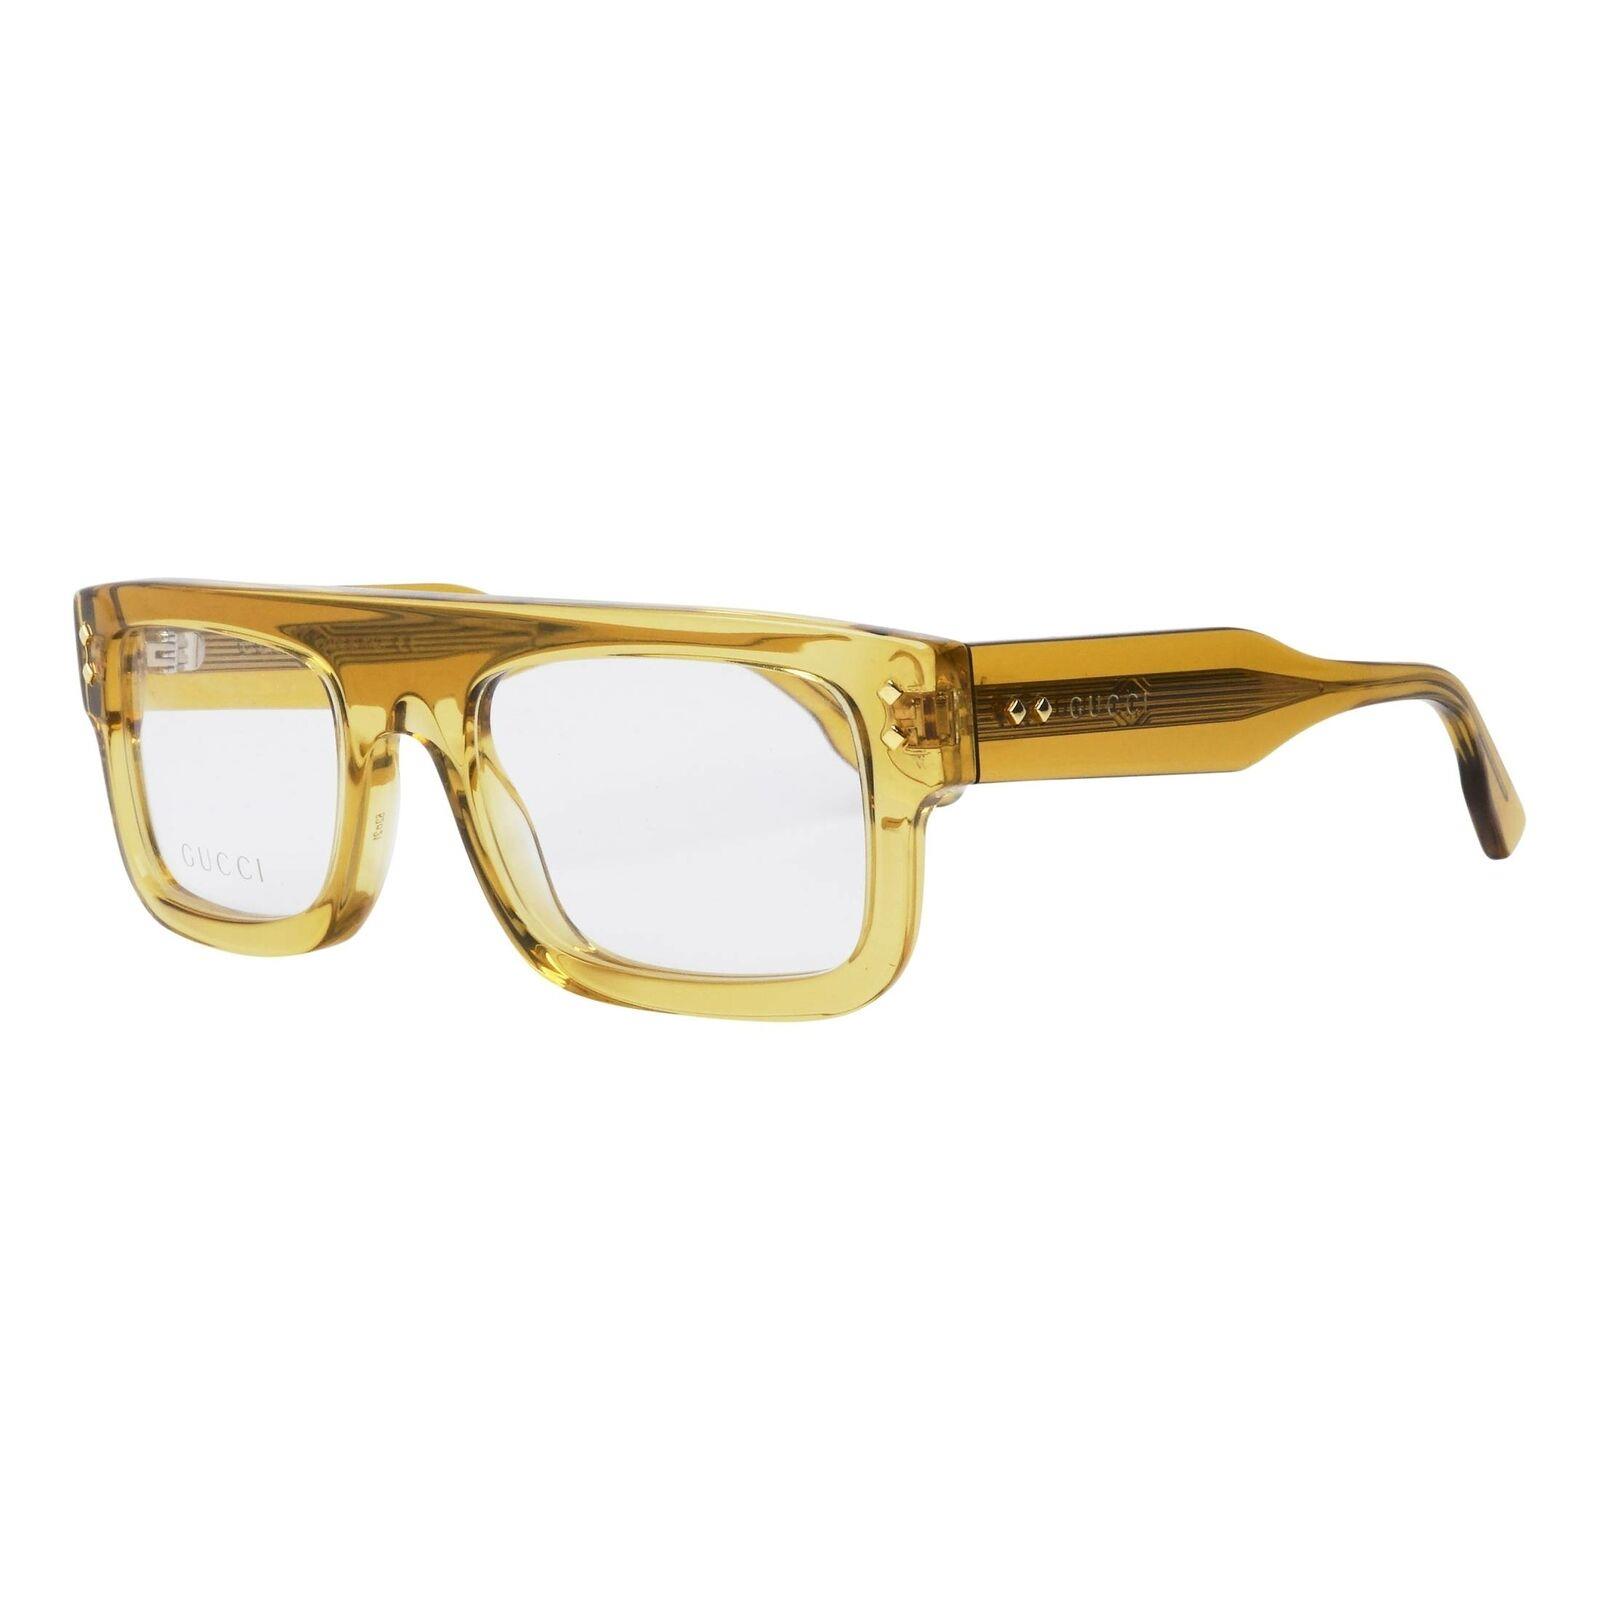 Gucci Rectangular Eyeglasses GG1085O-003 Shiny Yellow Frame Full Rim ...